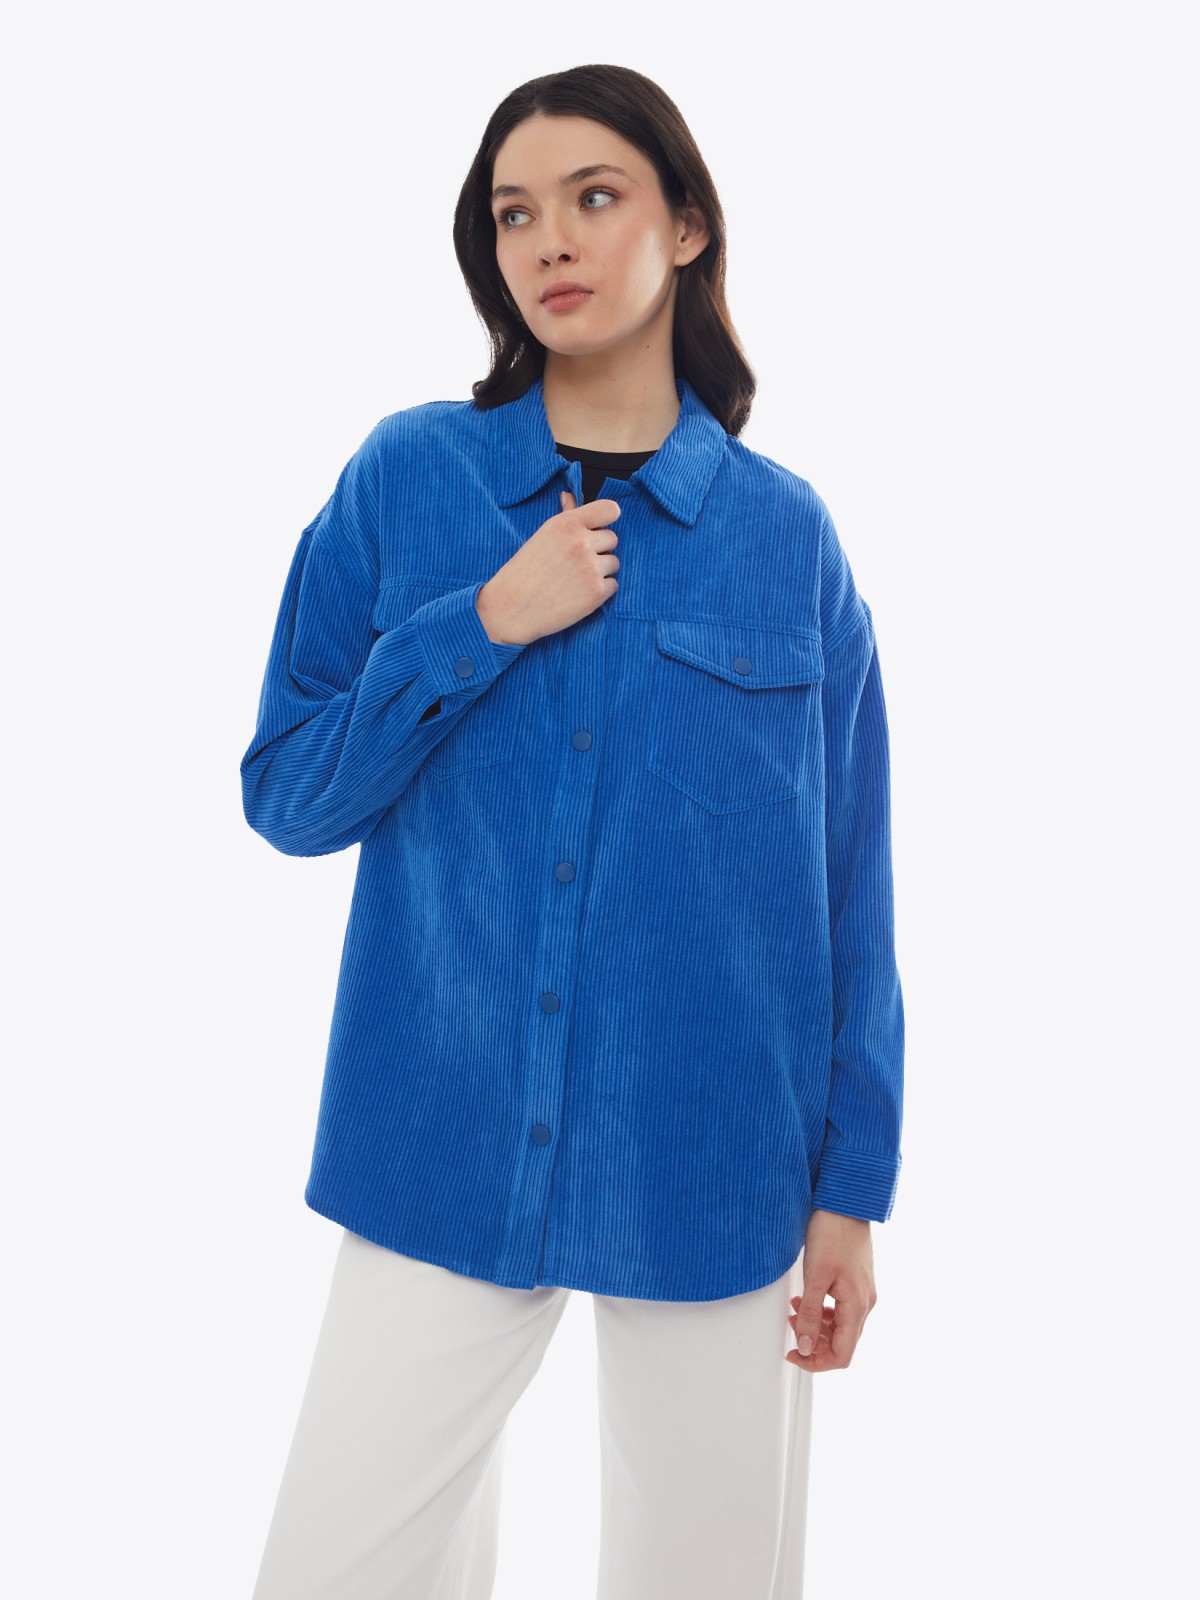 Куртка-рубашка объёмного силуэта из вельвета zolla 02412540L023, цвет голубой, размер XS - фото 4